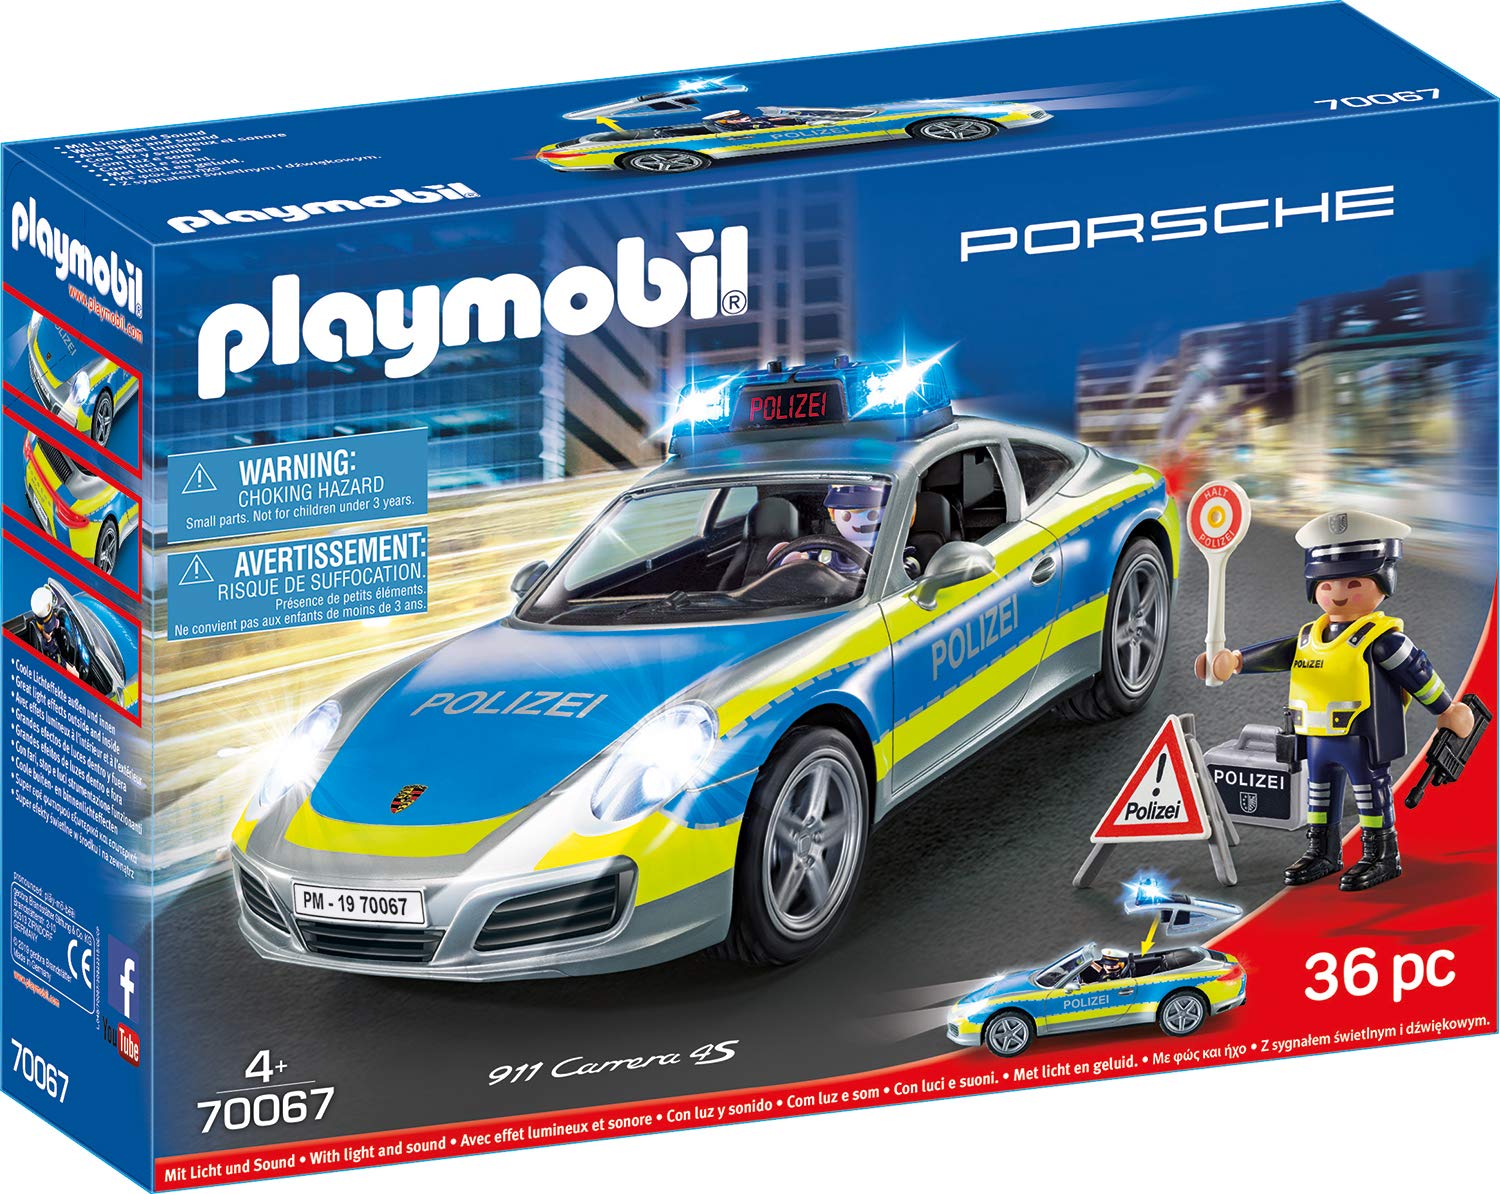 Playmobil Porsche 911 Carrera RS 2.7 PLY 70923 PLY70923 PLY.70923